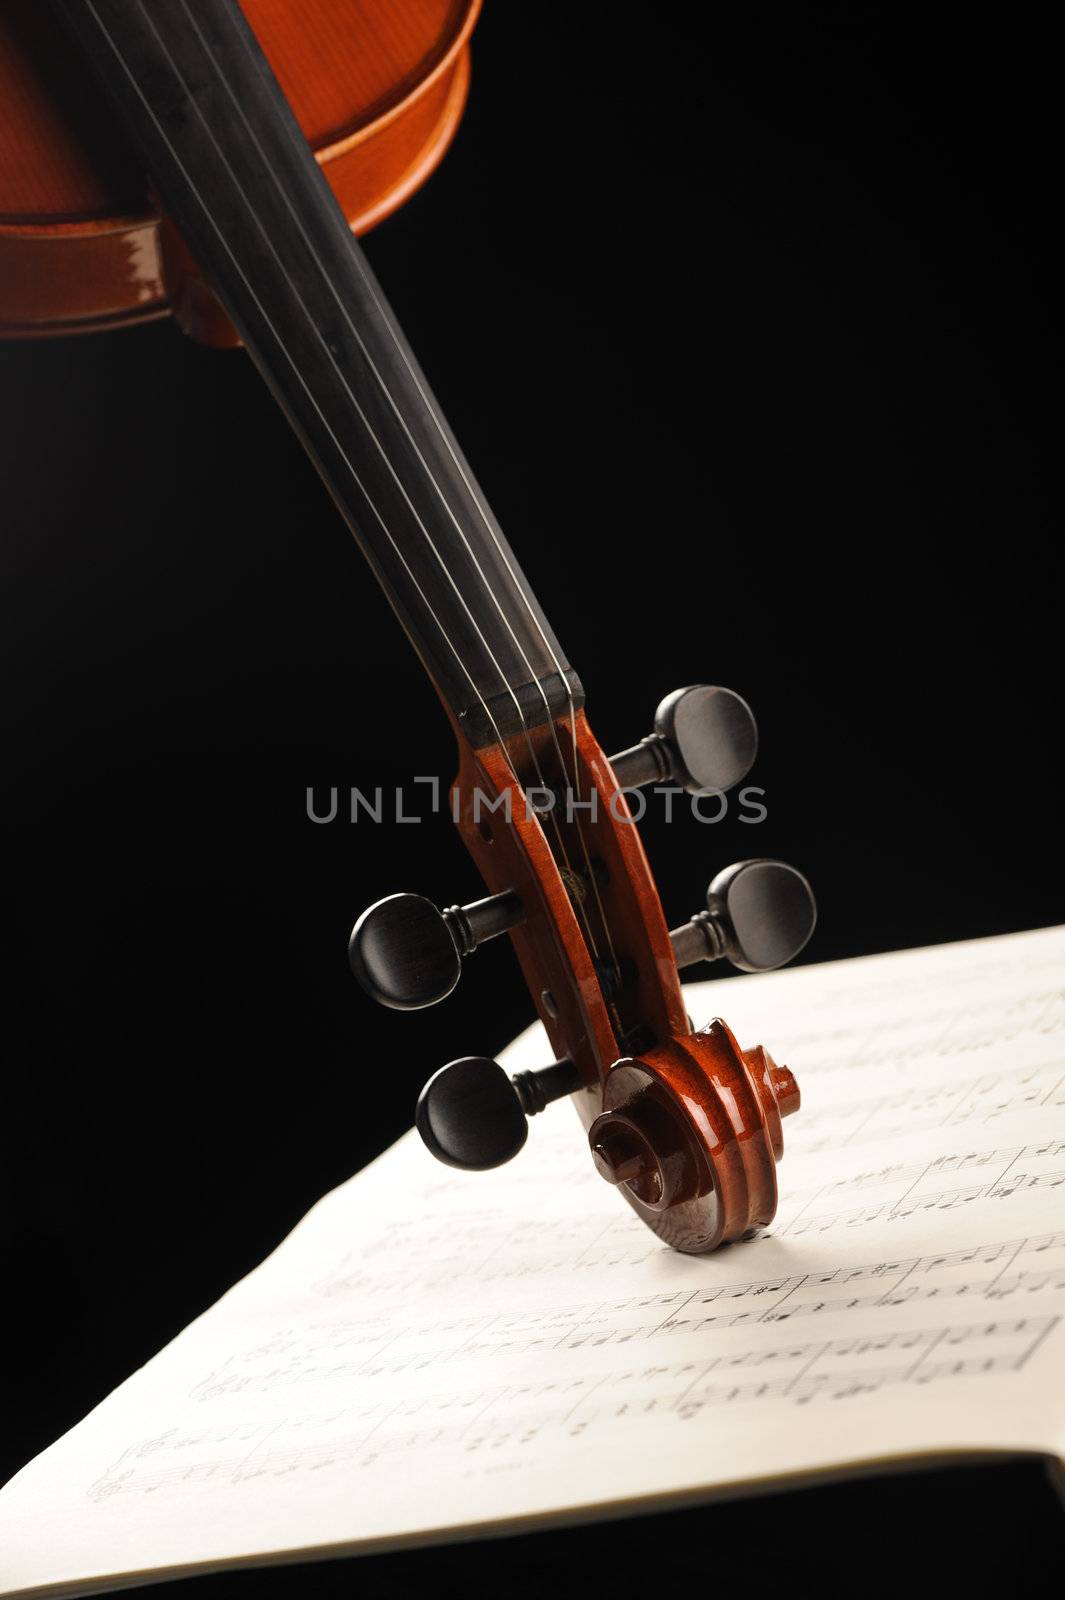 Elegant shot of a violin on a music sheet